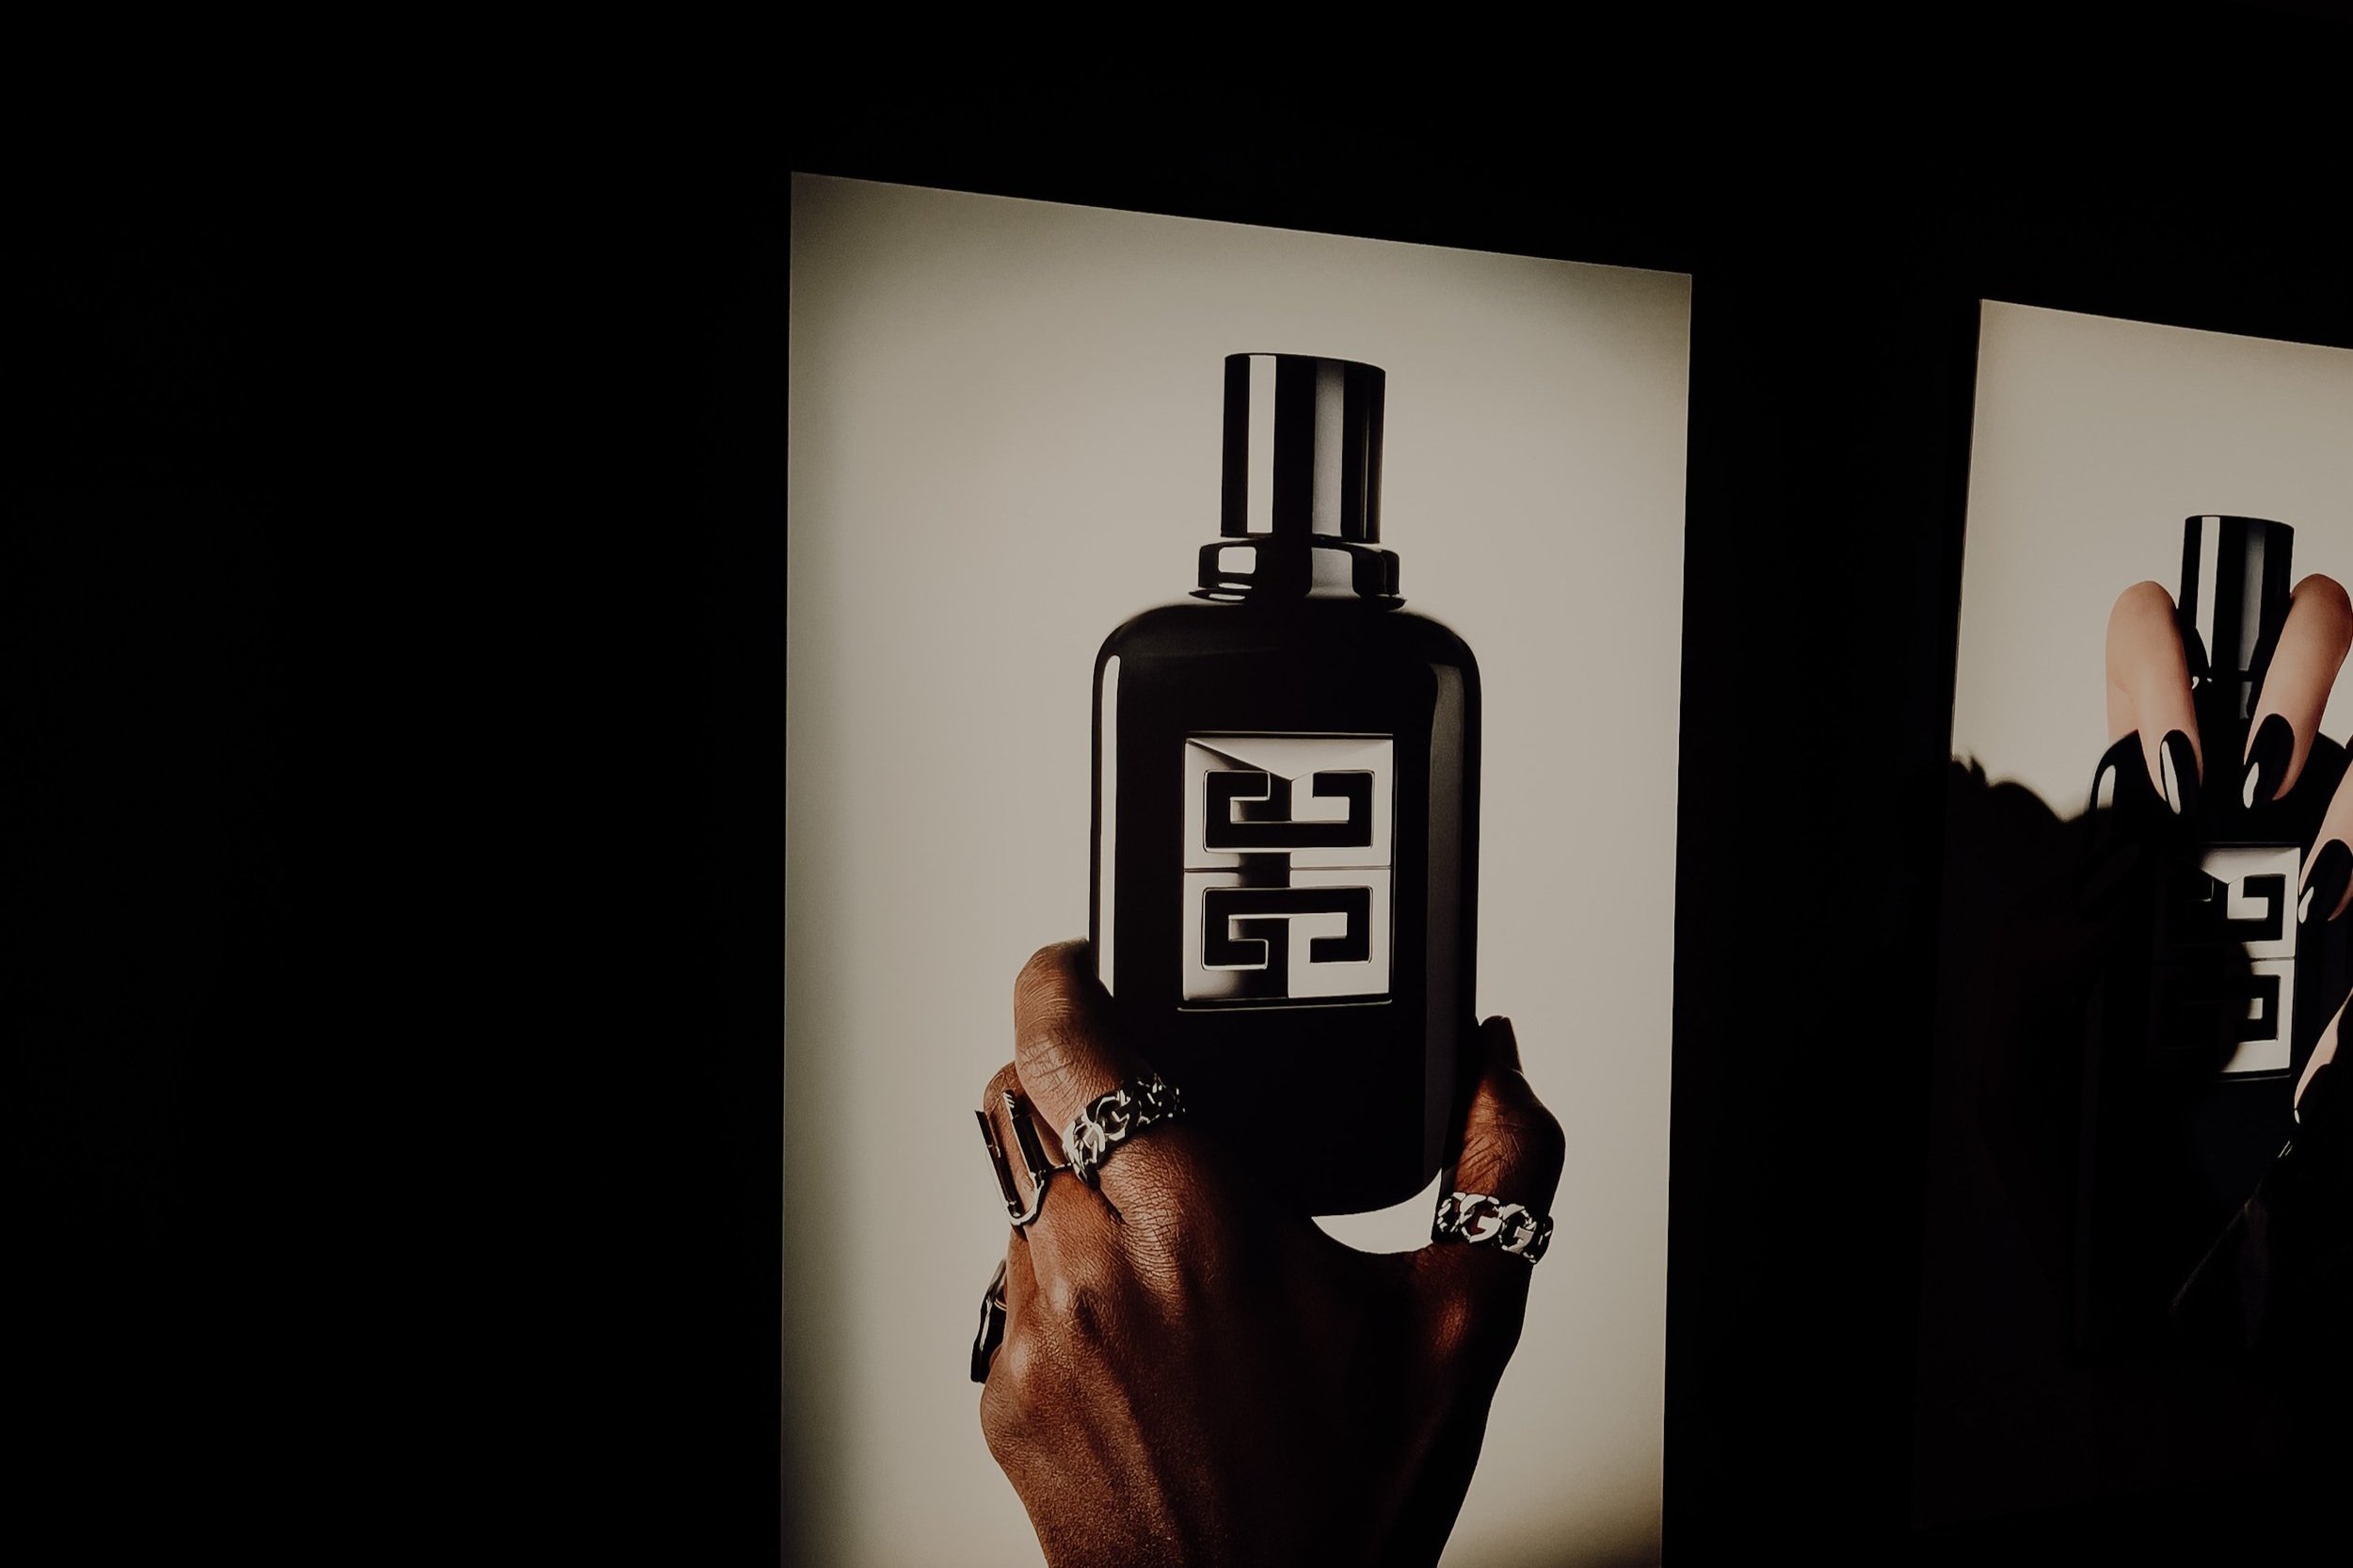 YSL - The Perfume Society